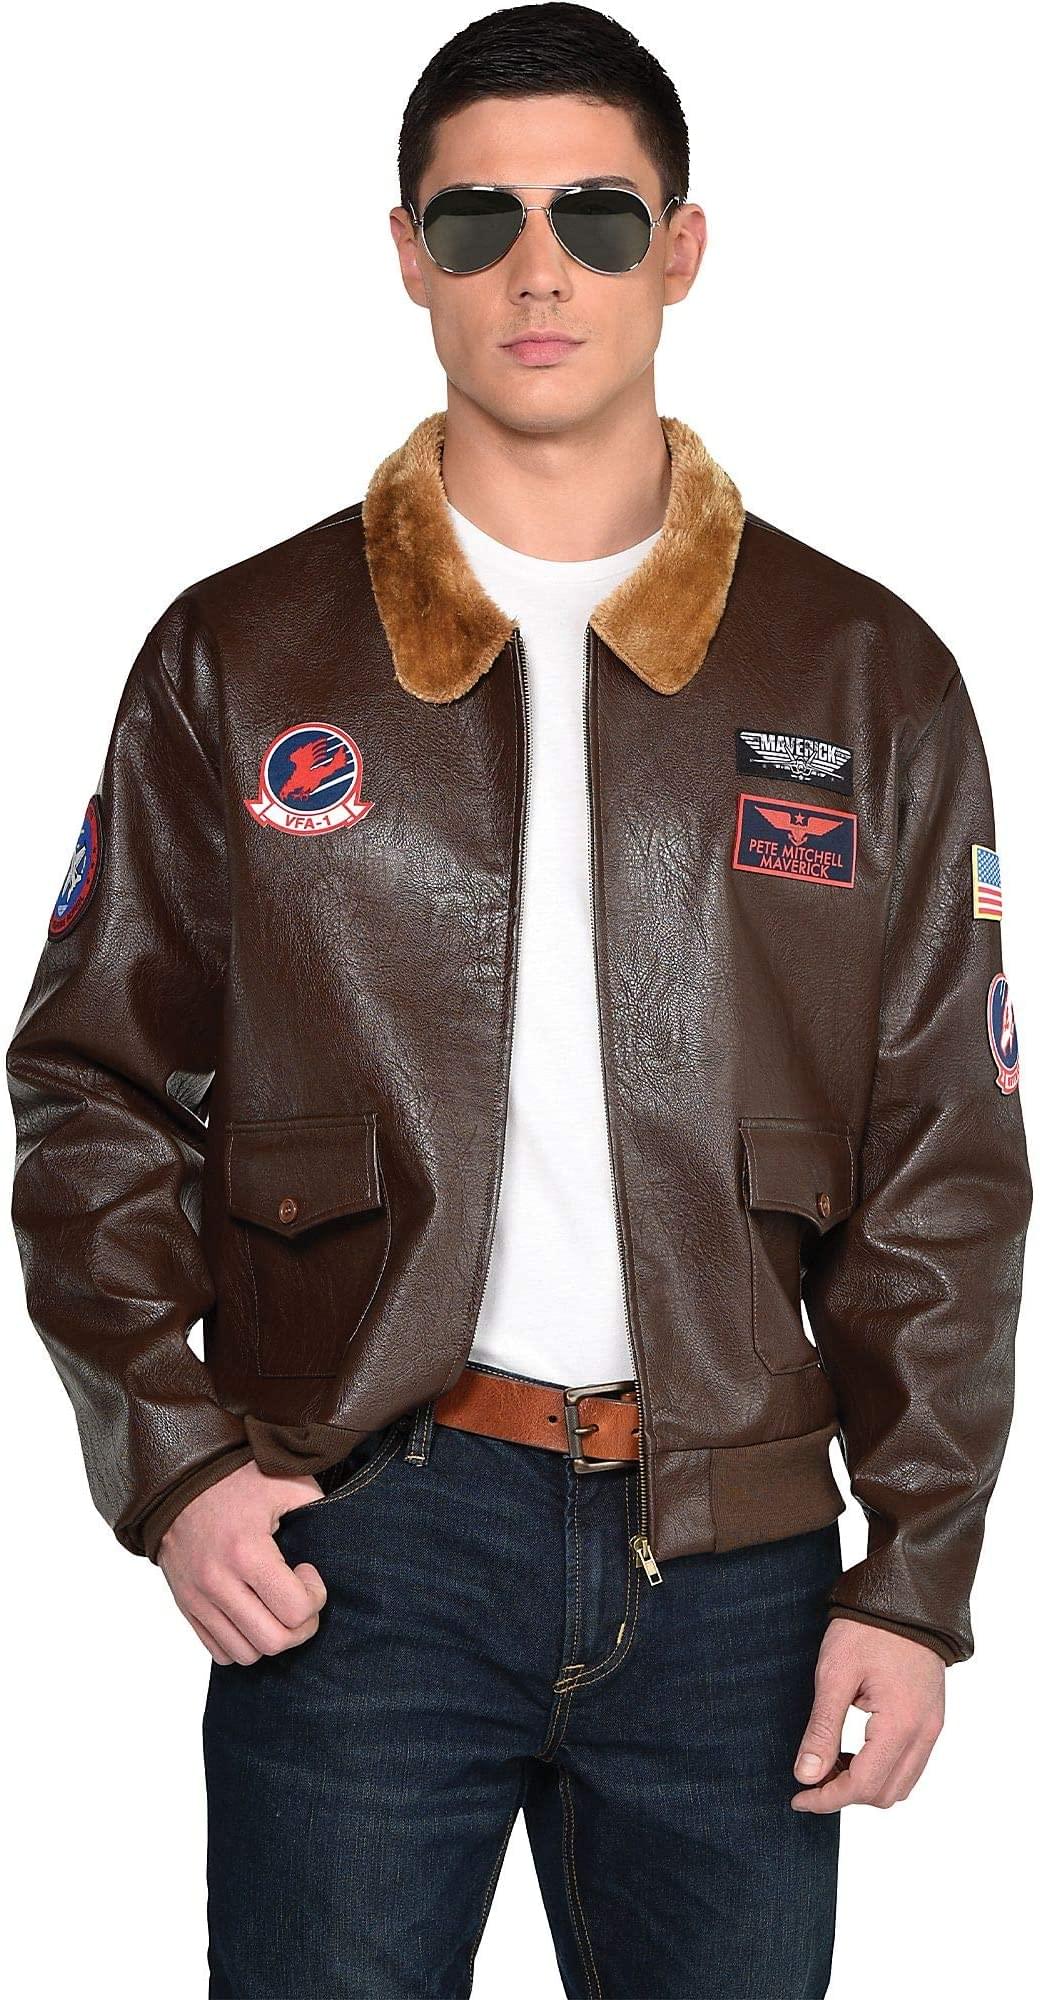 Top Gun: Maverick Bomber Jacket Costume Adult Mens